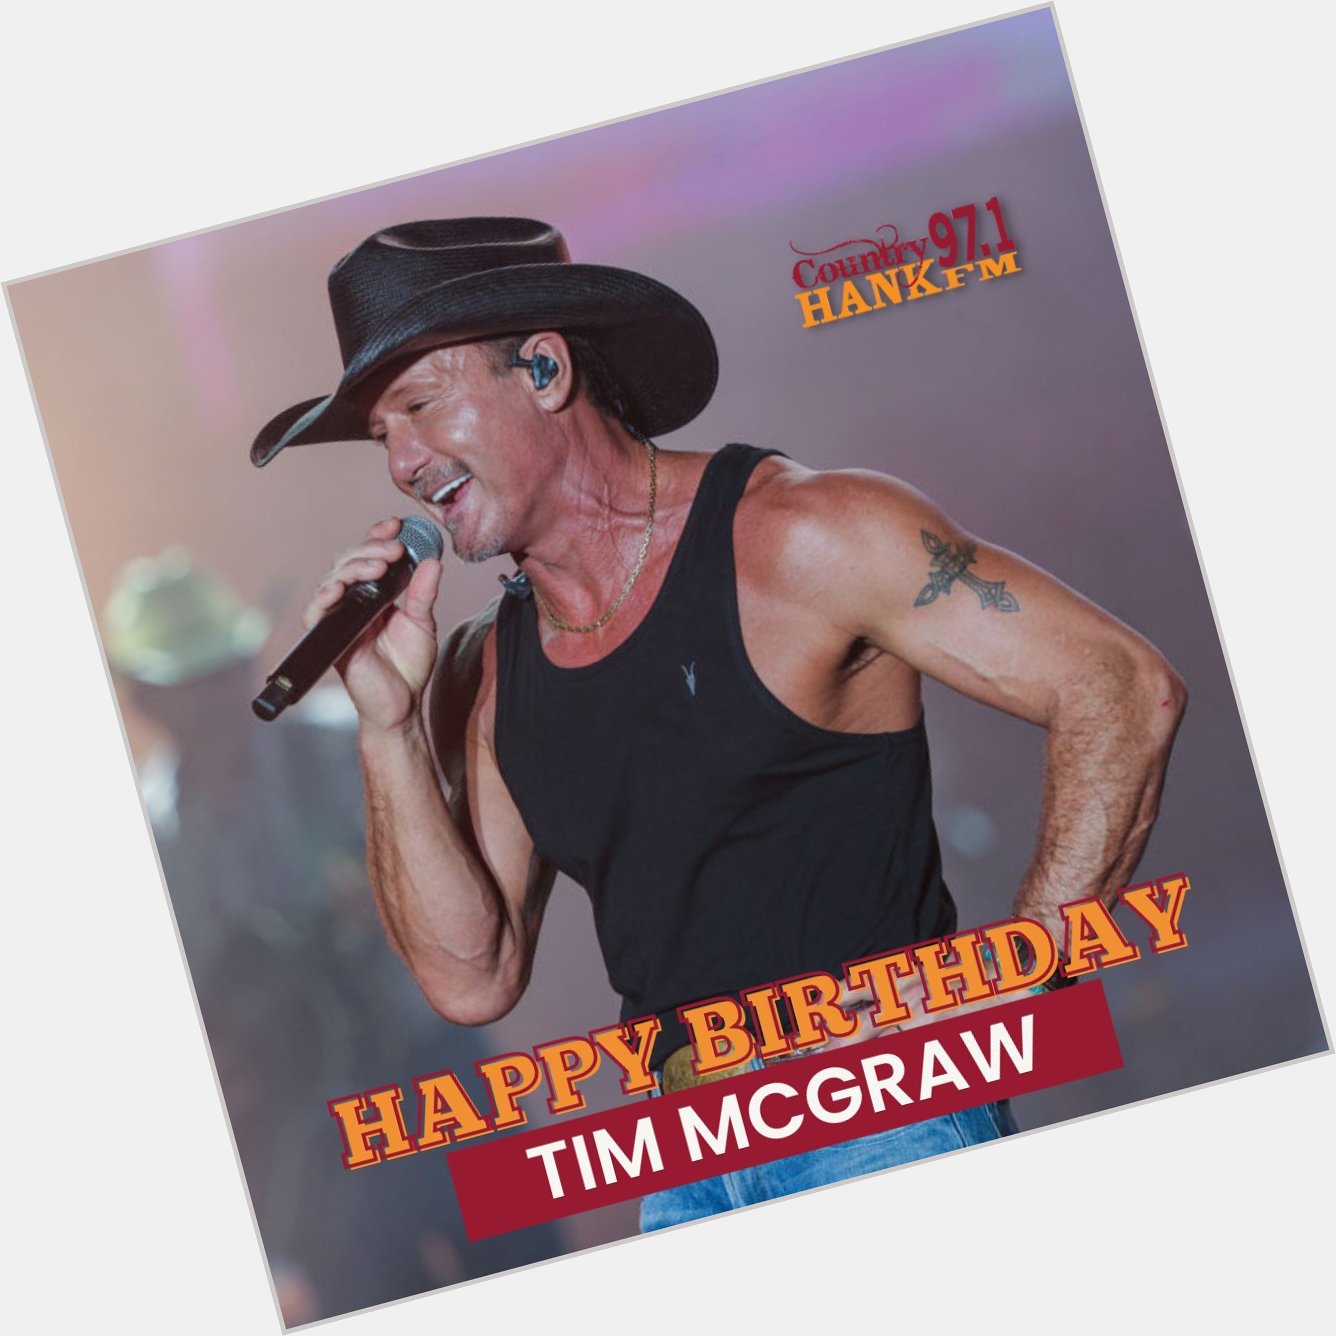 Happy Birthday Tim McGraw!  